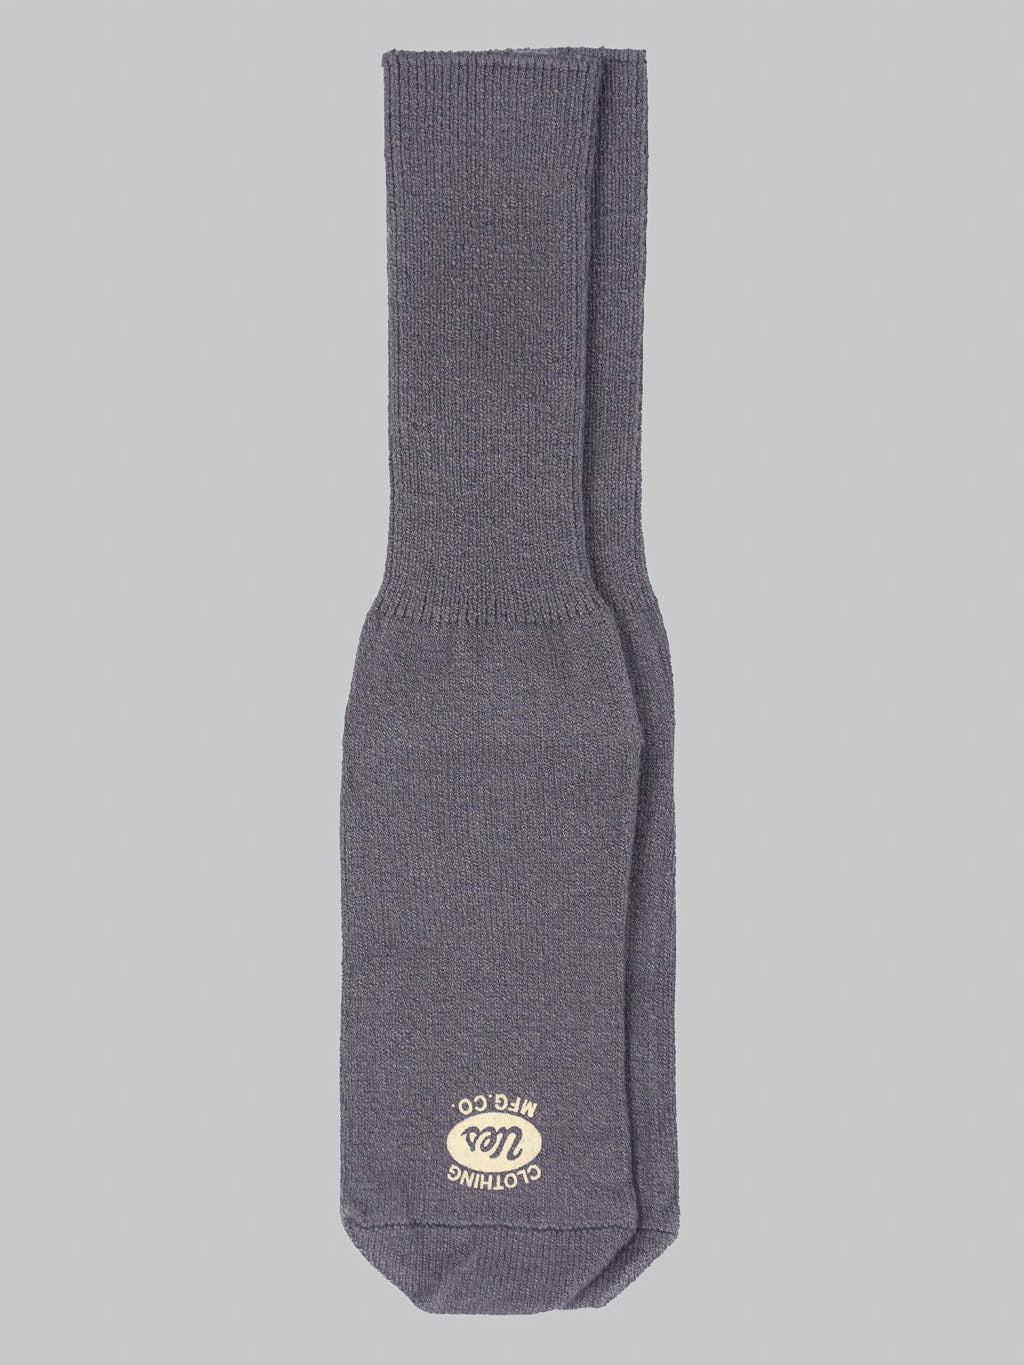 UES Yarn Unevess Three Ply Socks Grey made in japan